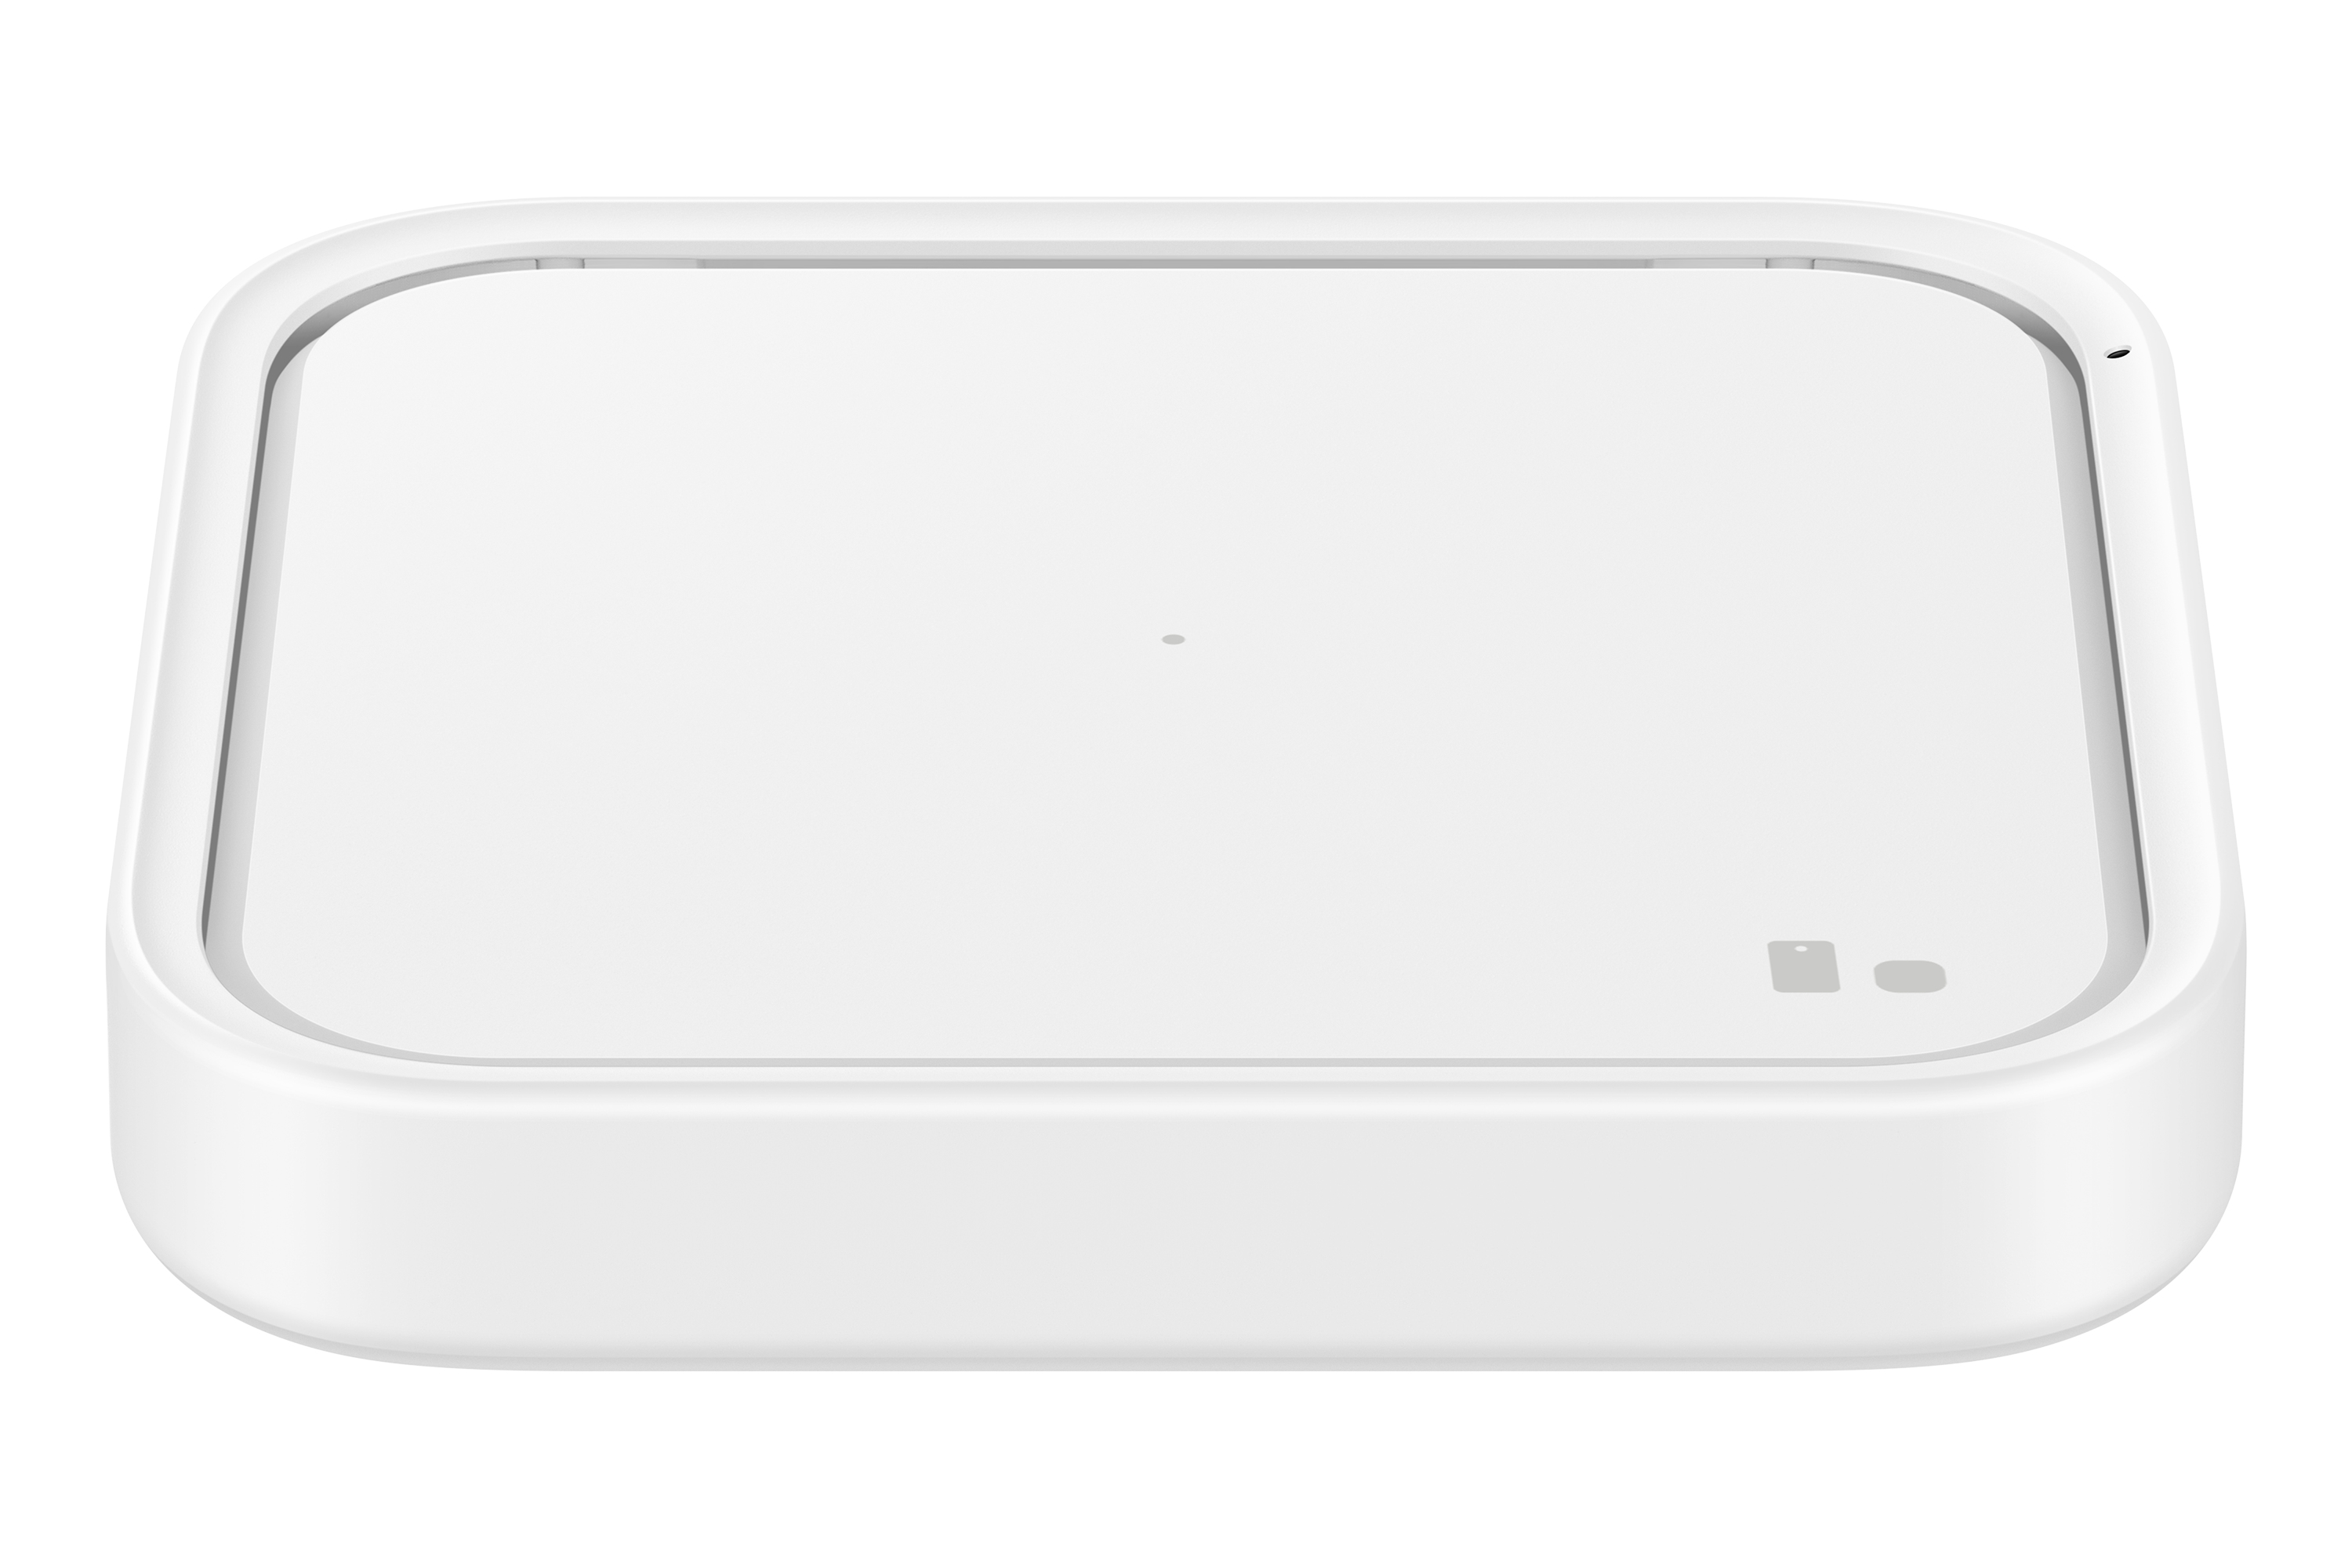 15w Wireless Charger Pad White Ep-p2400tweggb - WC01